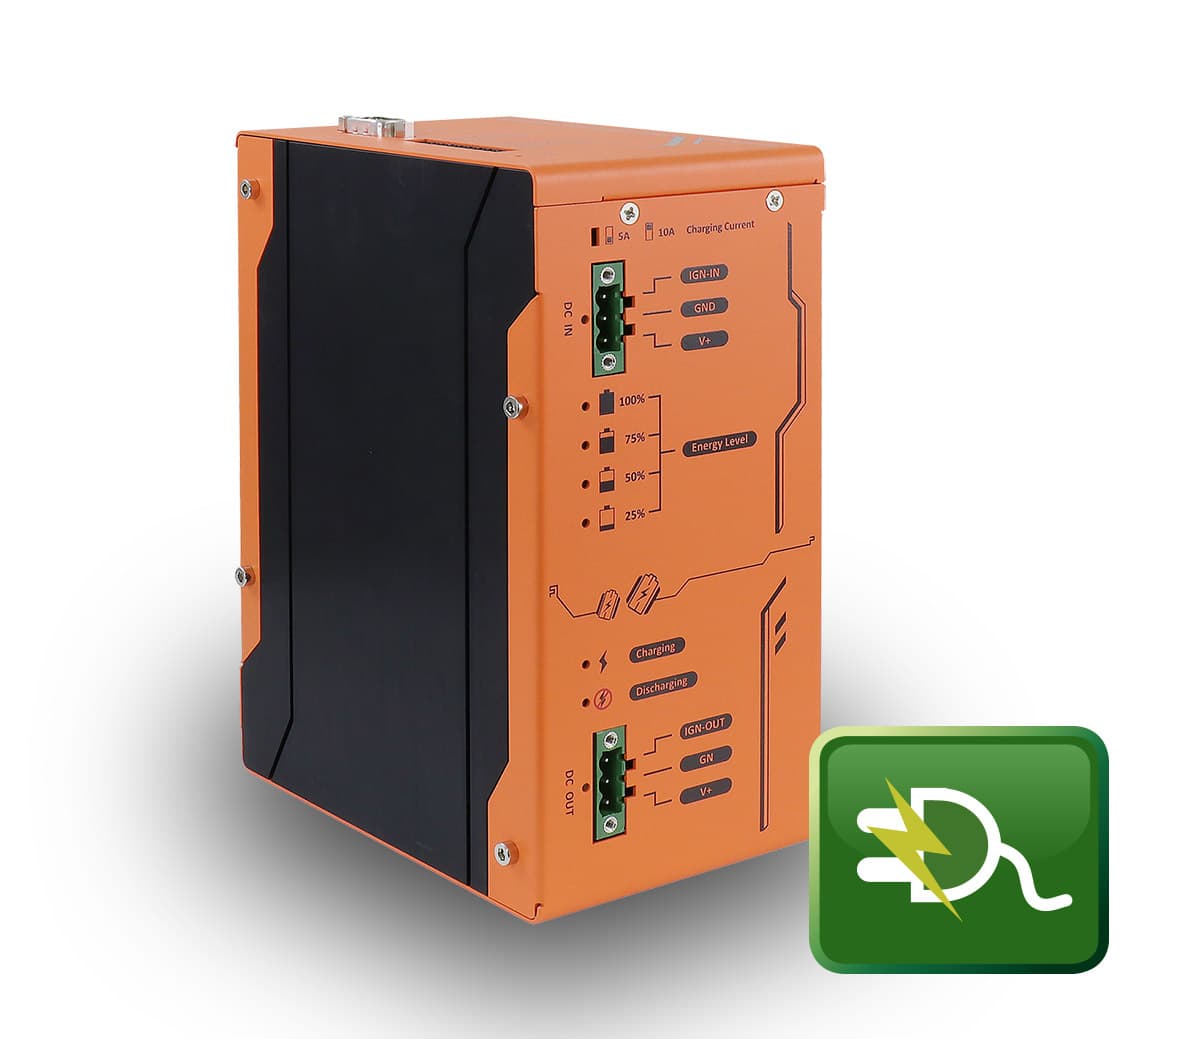 Universal standalone emergency power module for box PCs